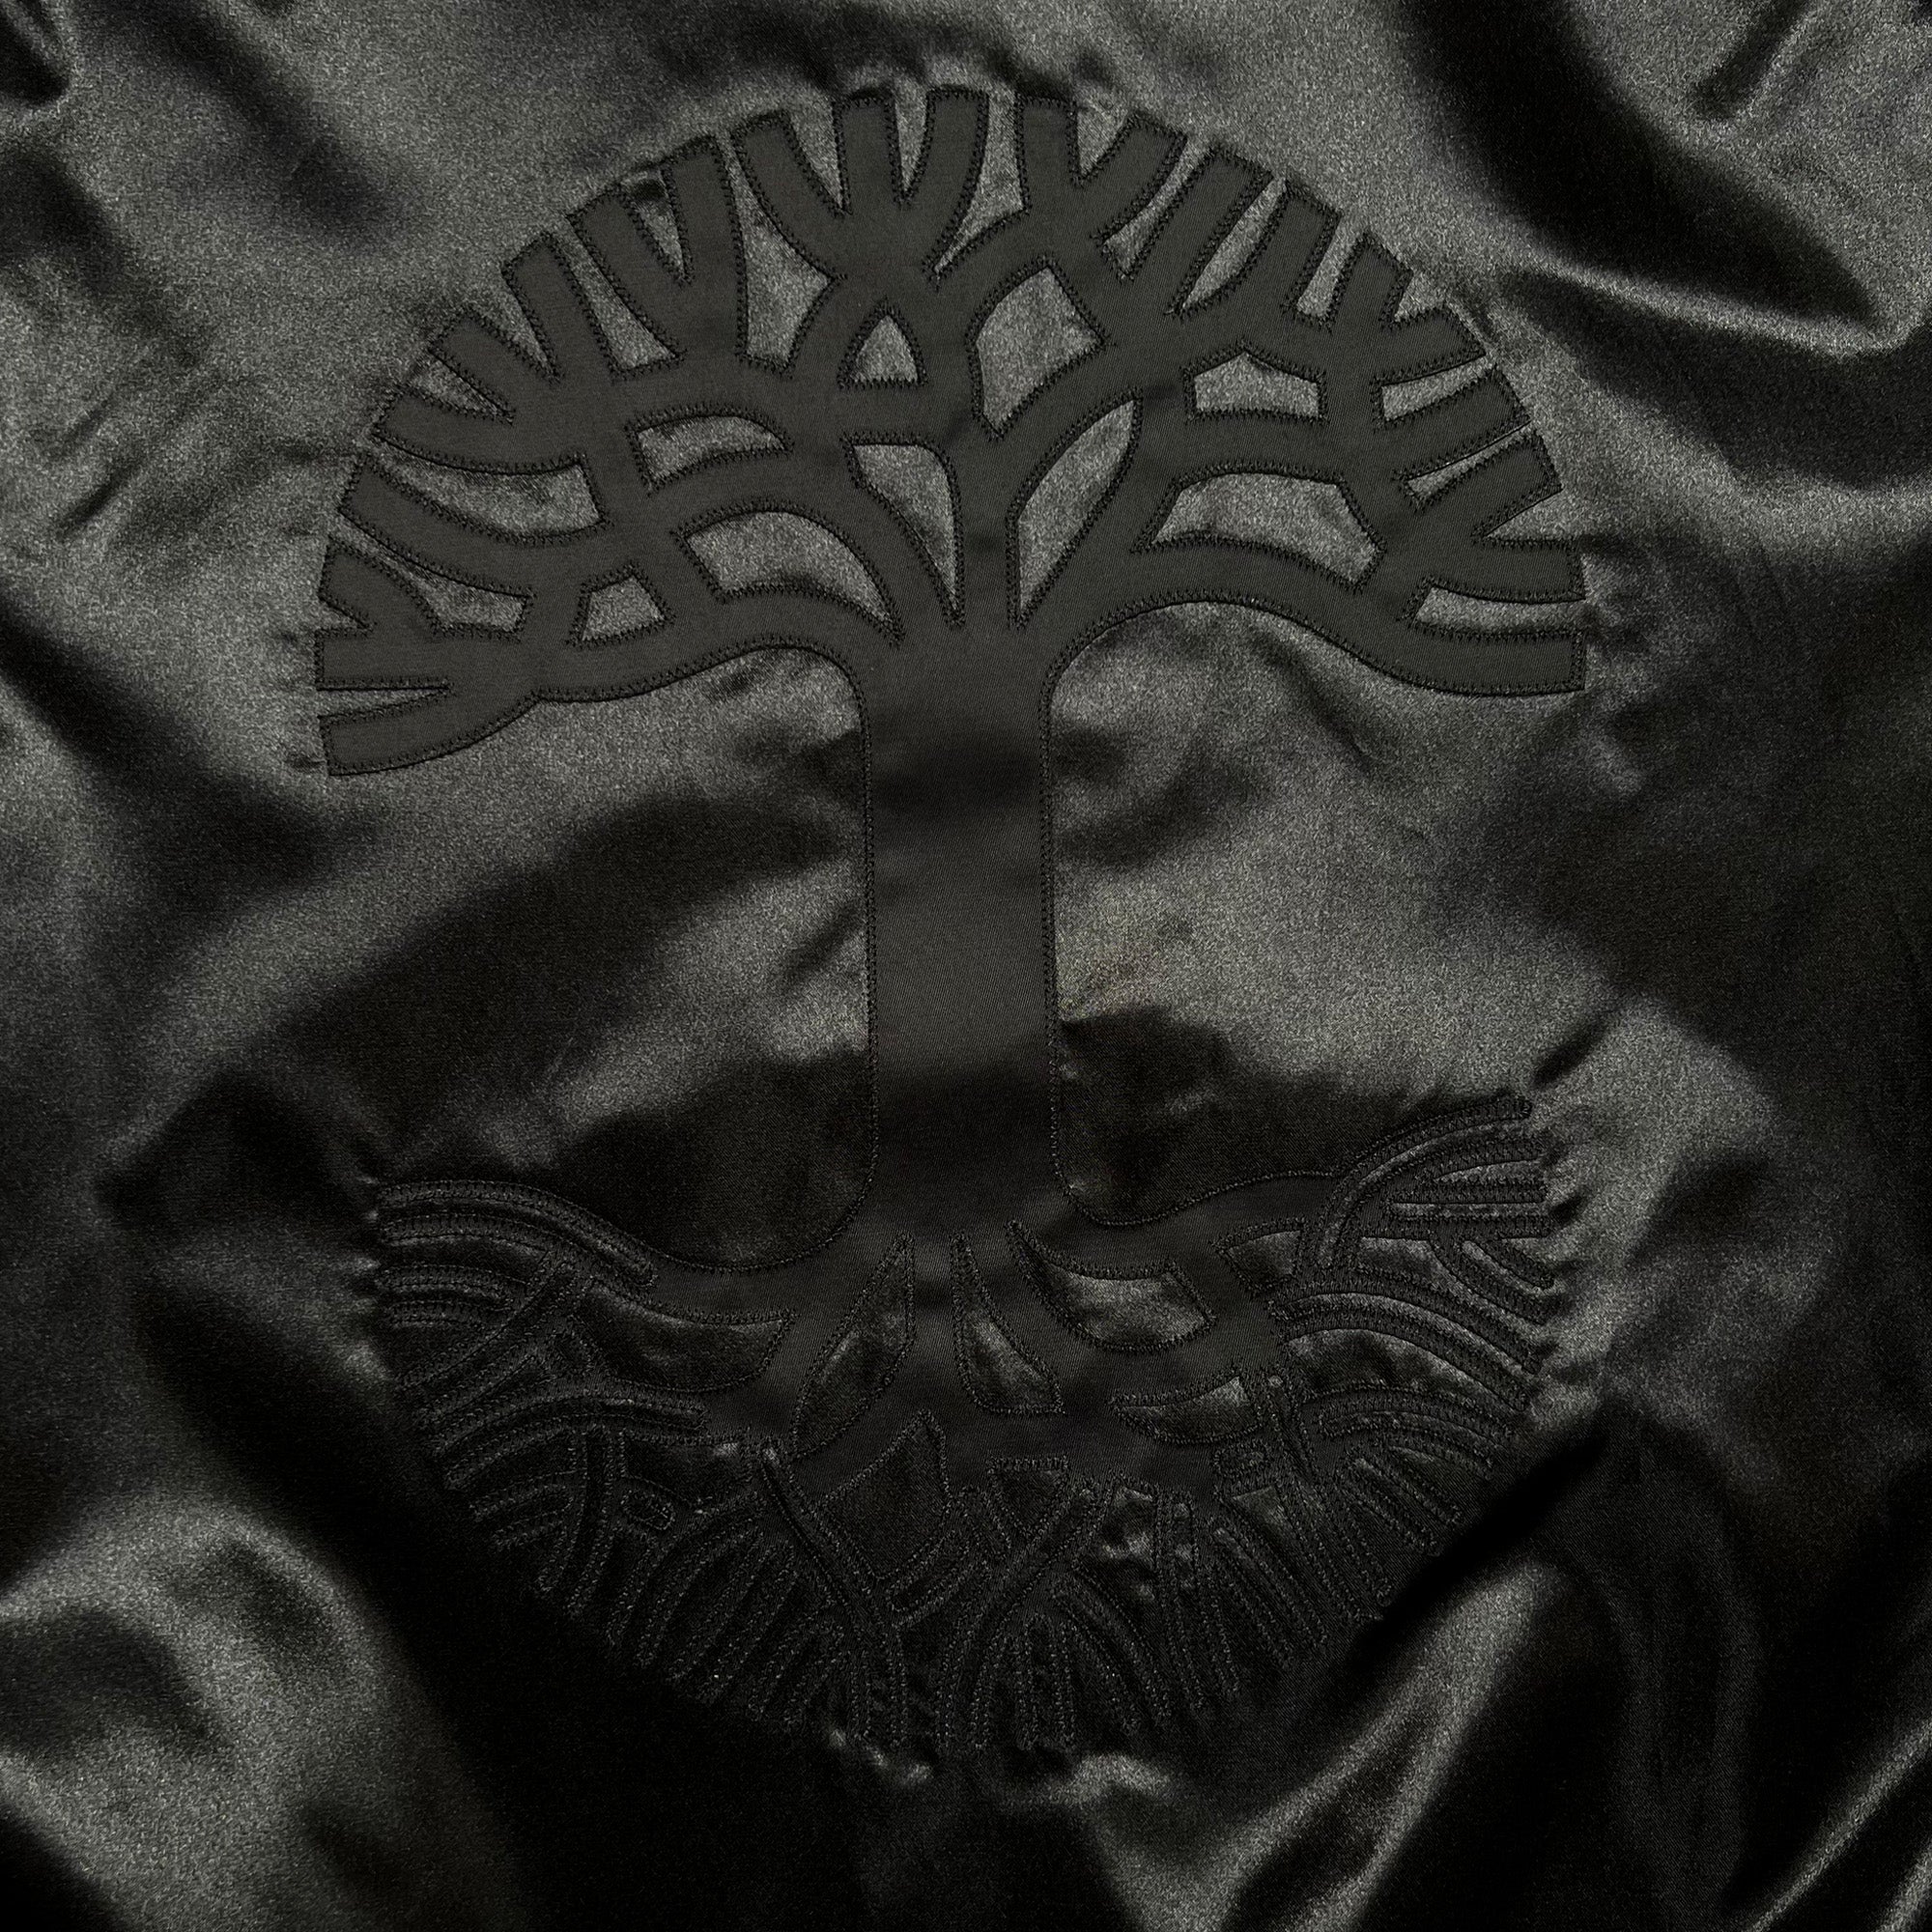 Detailed close-up of large centered Oaklandish tree logo on the backside of Mitchell & Ness black satin reversible jacket.